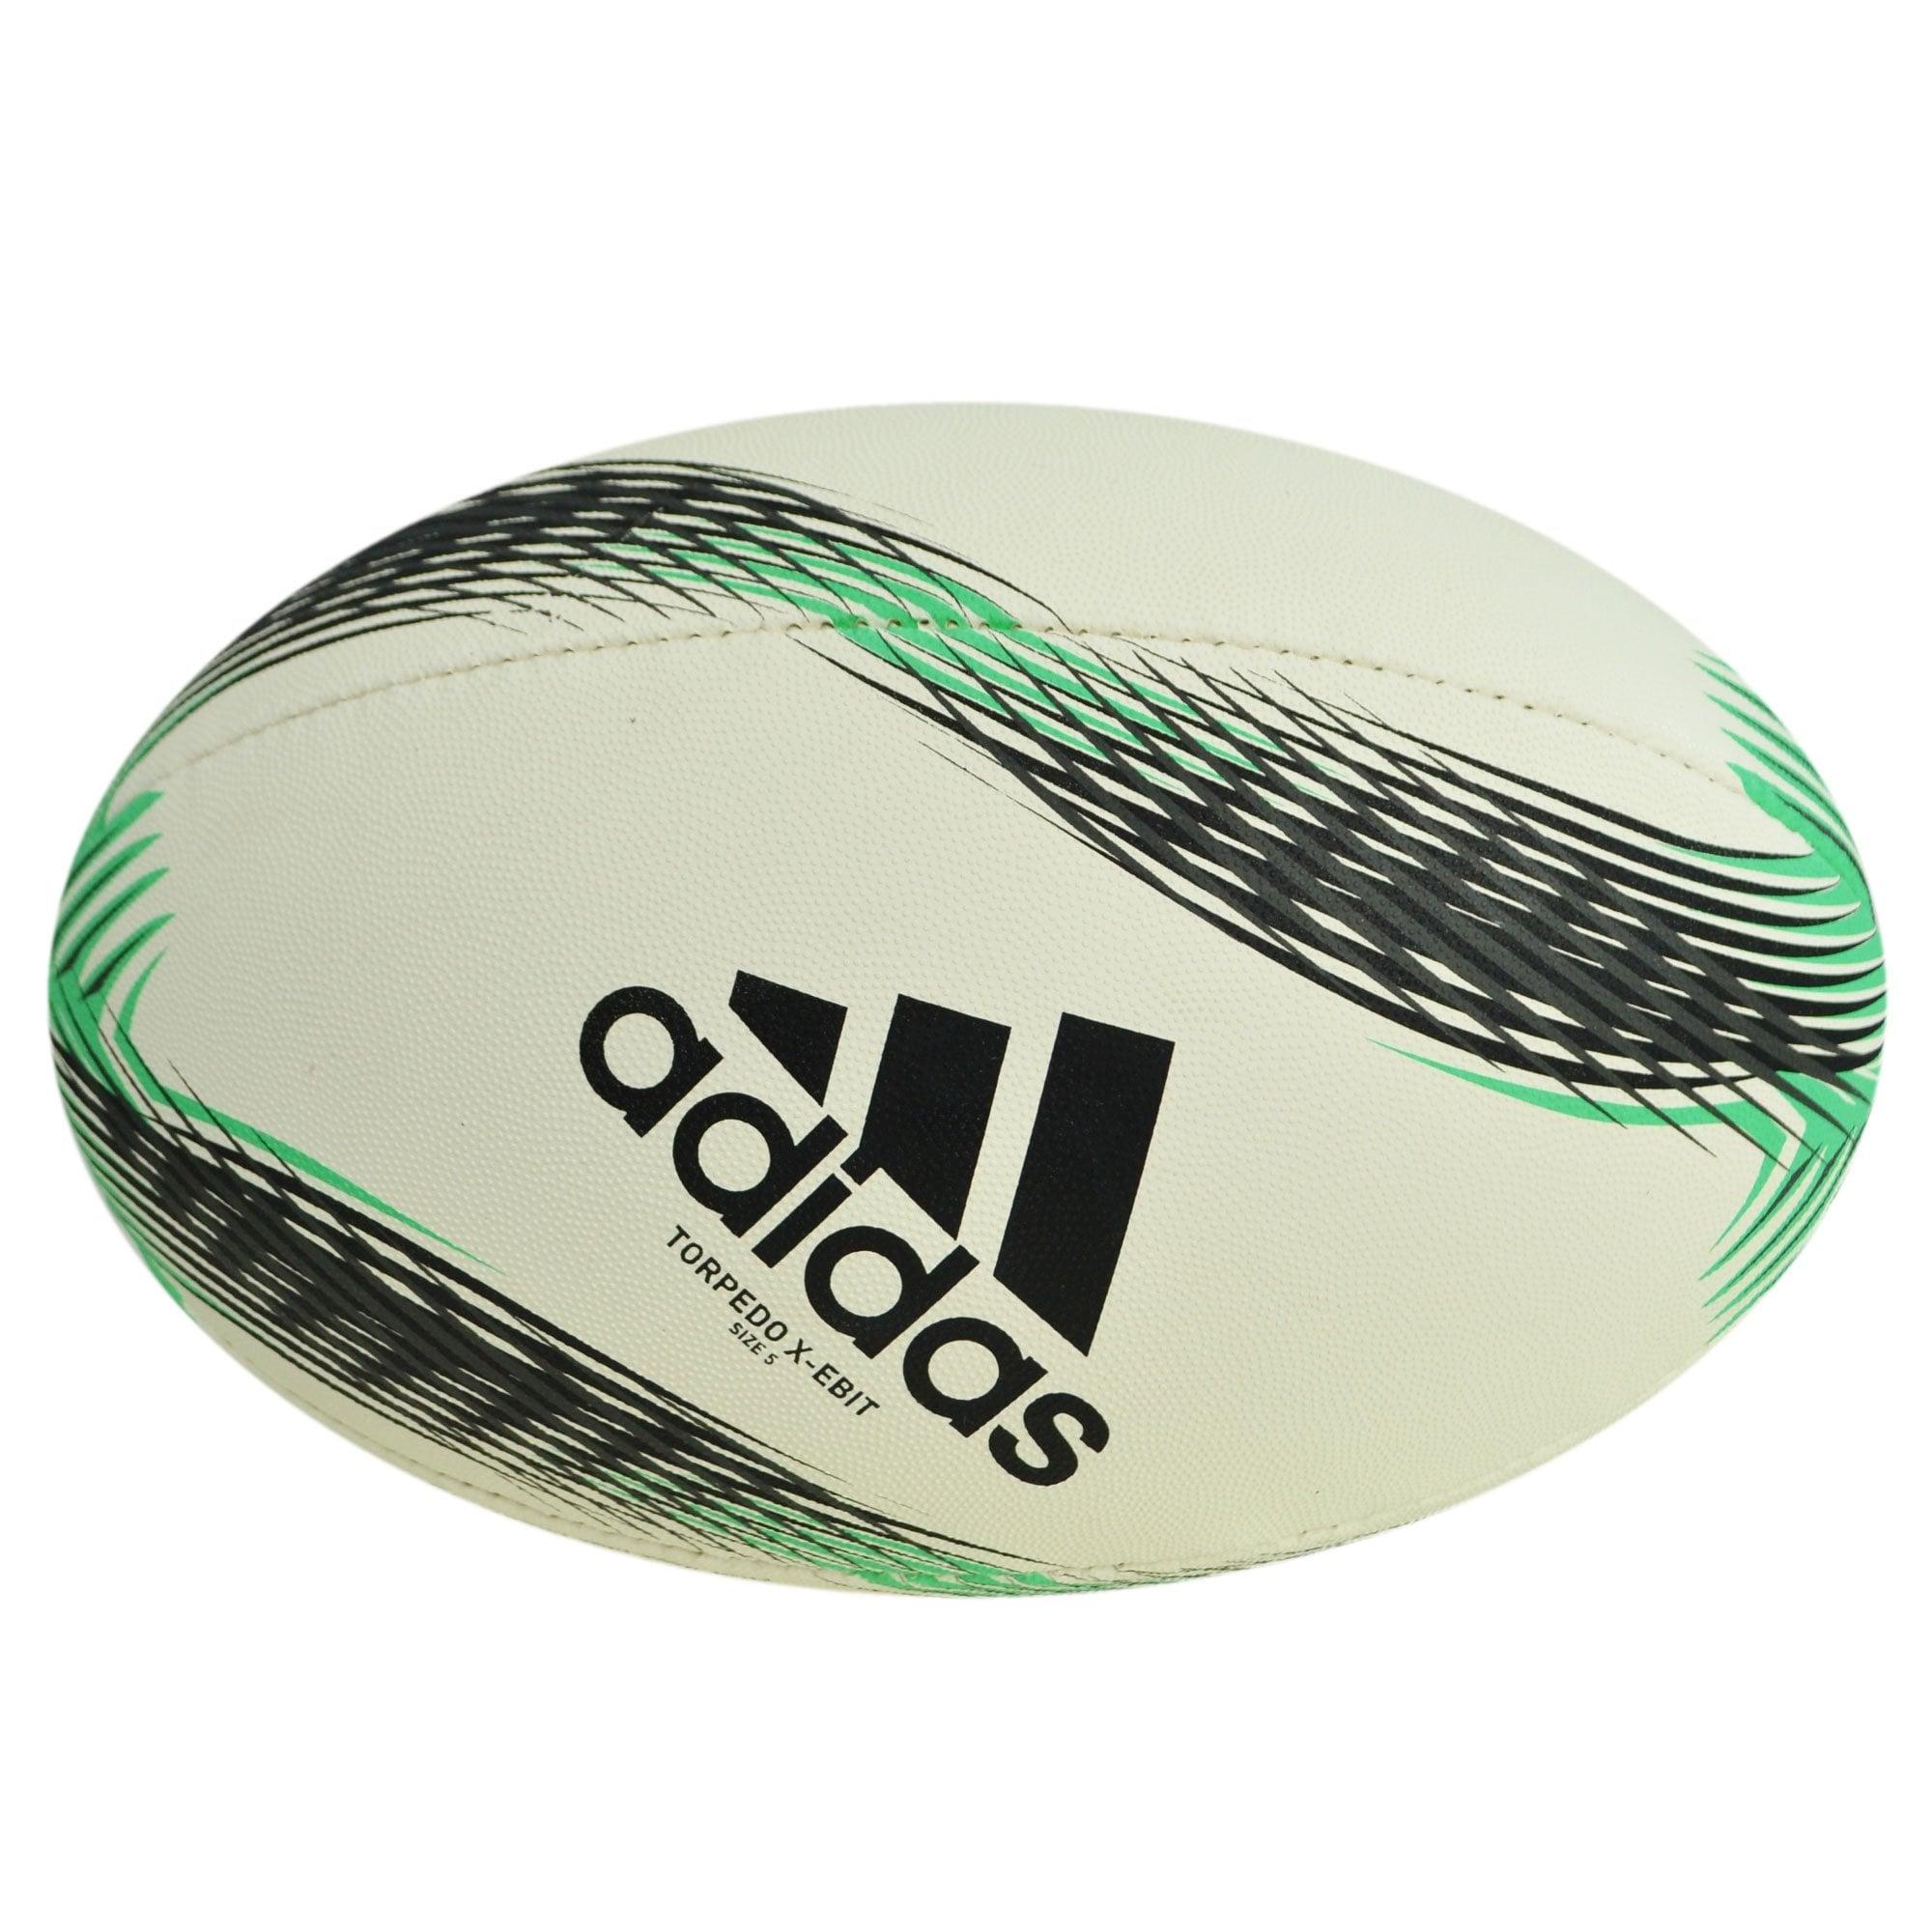 White X Green Ball Logo - Torpedo X-Ebit Rugby Ball - White, Black and Green